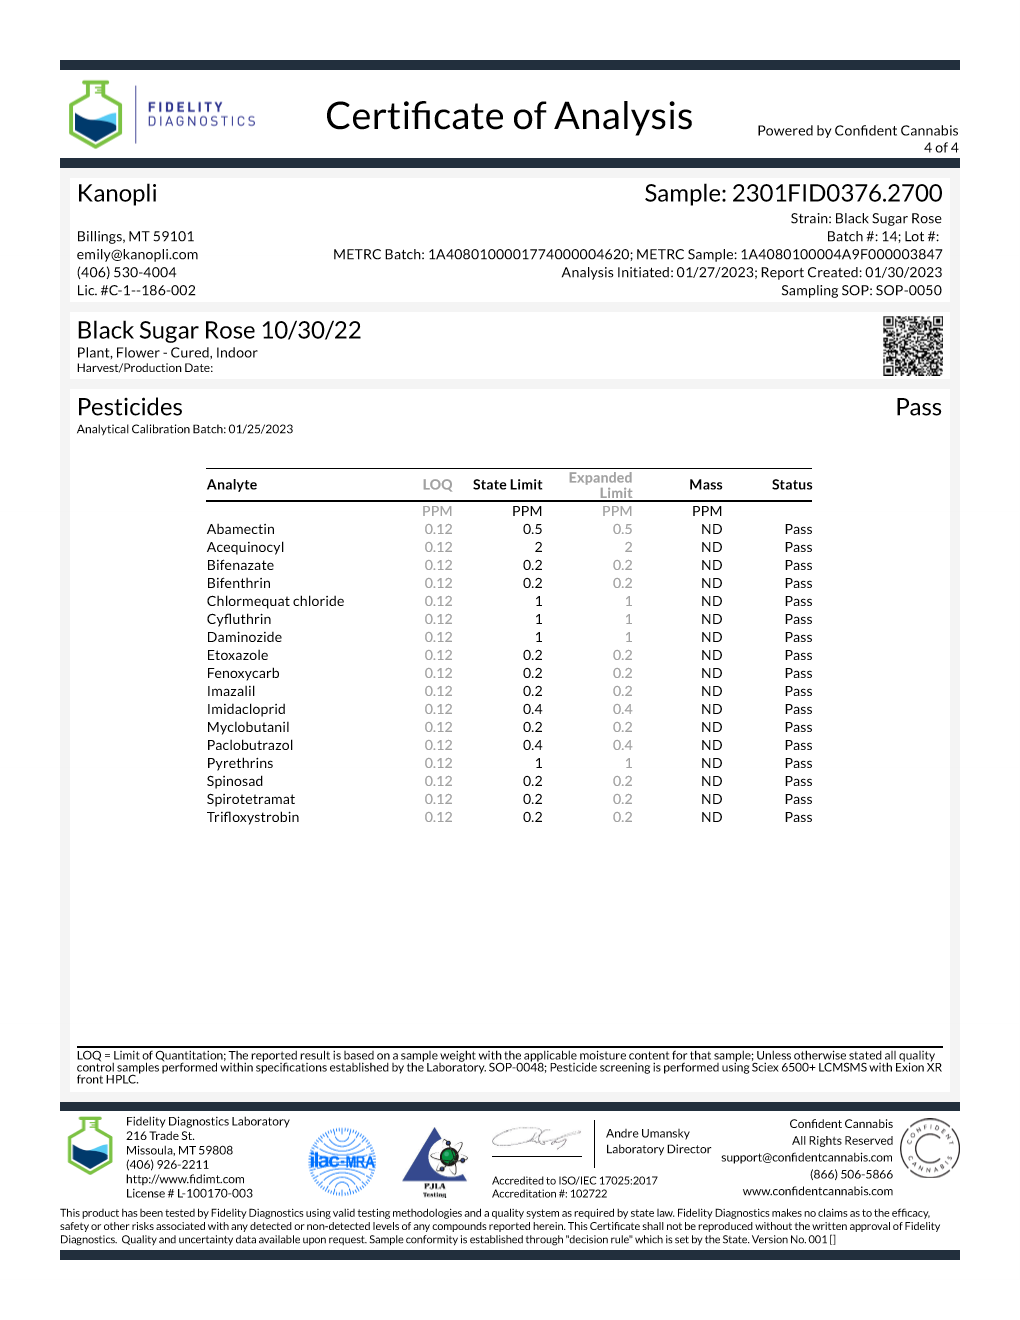 Adult Use - Black Sugar Rose - Indica 26.30% THC (Oct. 2022)